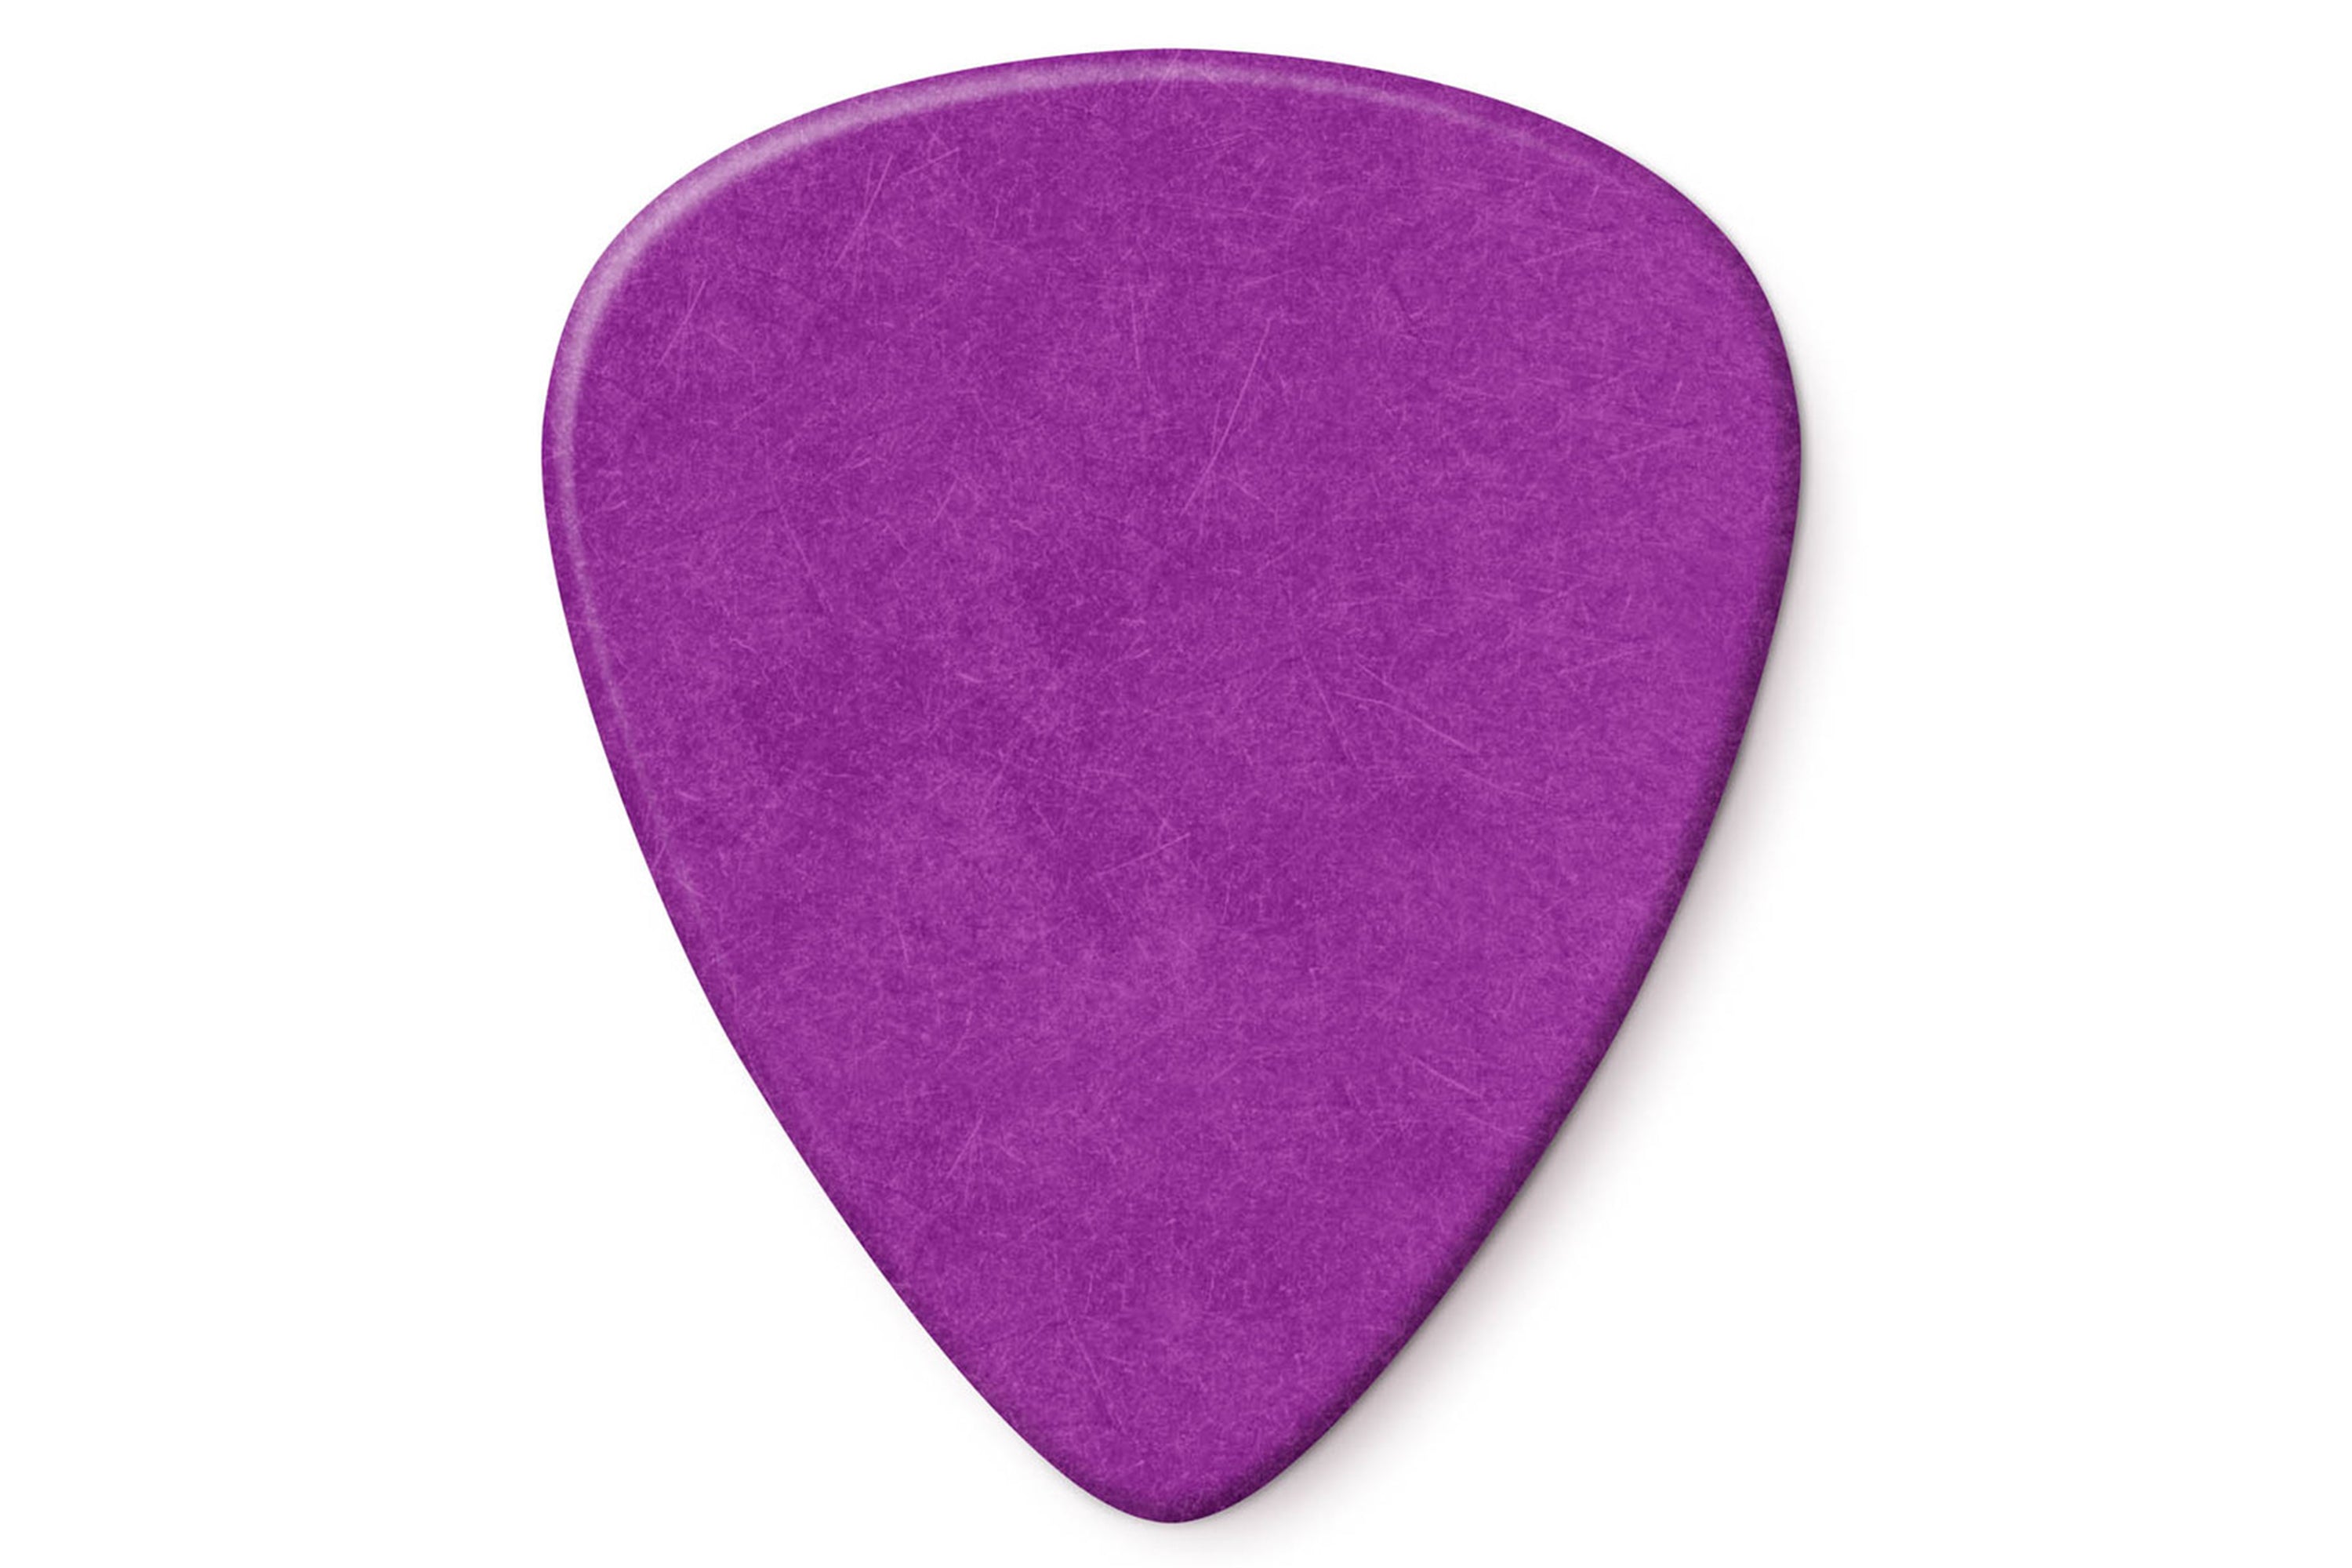 Dunlop Tortex® Standard 1.14mm Purple Guitar & Ukulele Pick - SINGLE PICK